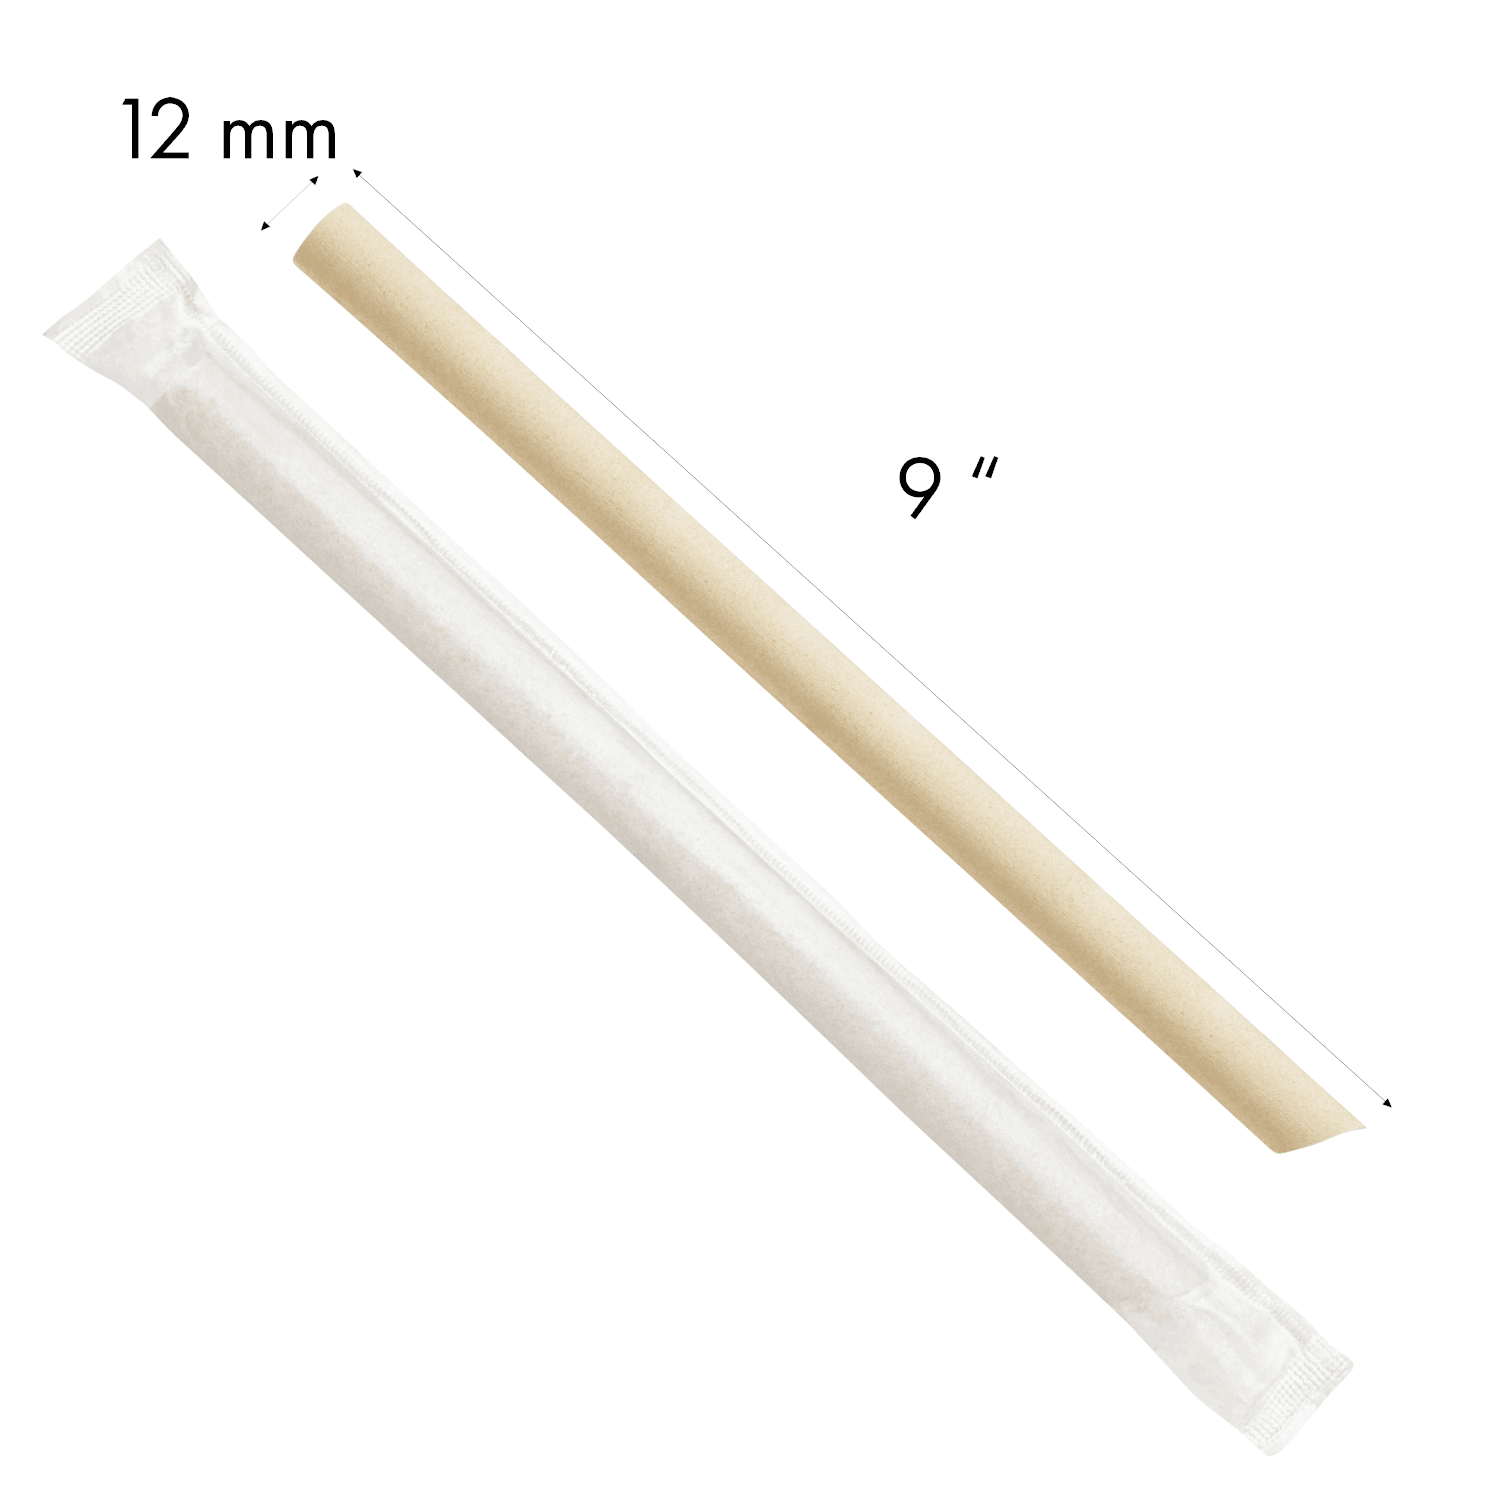 Karat Earth 9" Diagonal Cut Bamboo Fiber Colossal Straws (12mm) Paper Wrapped, Natural - 1,600 pcs